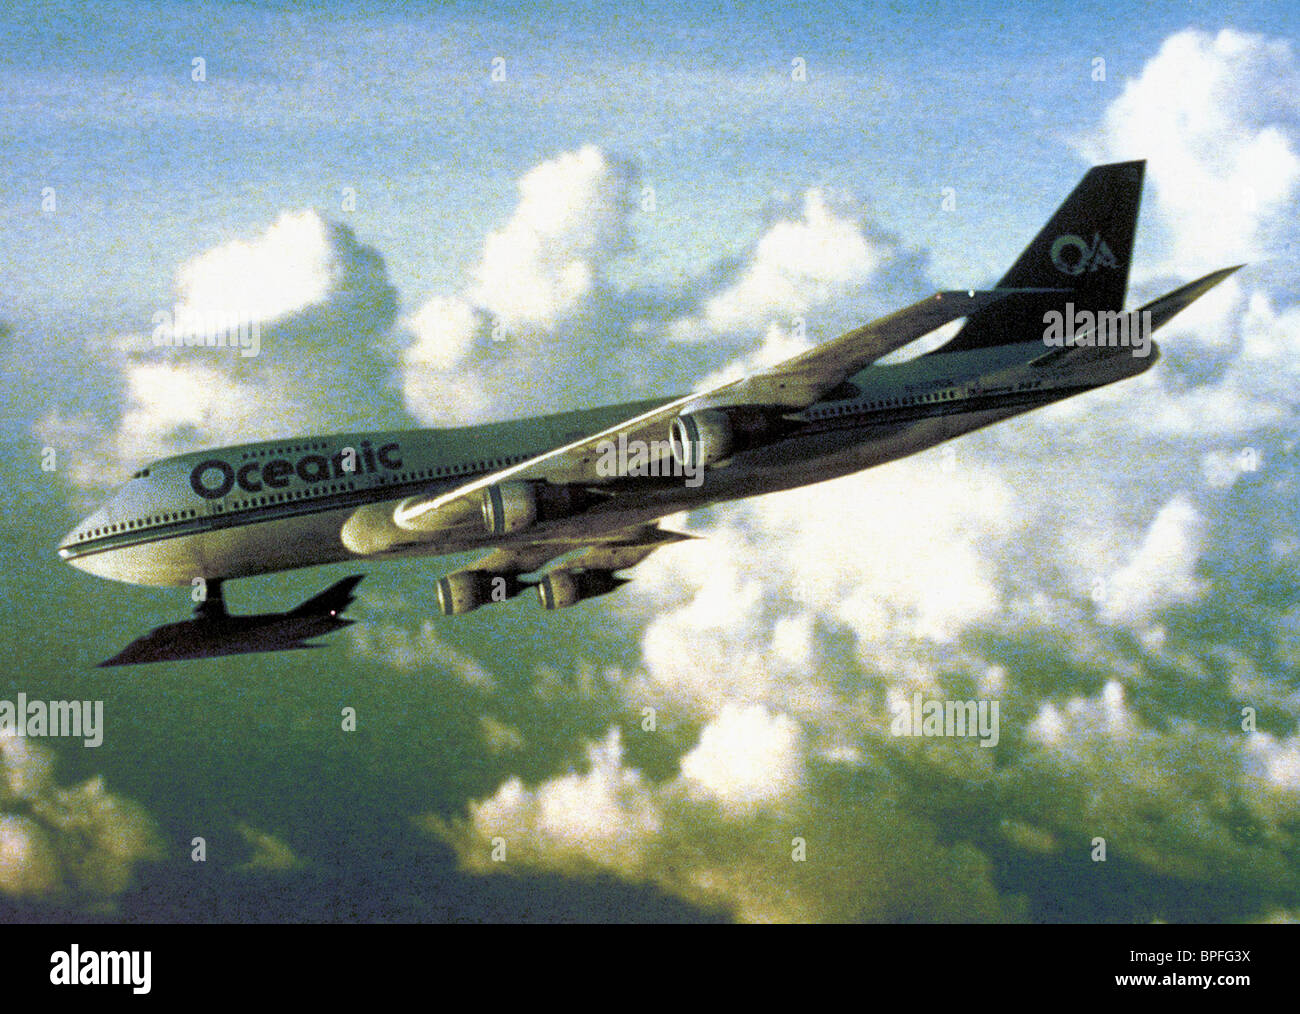 midair-boarding-operation-executive-decision-1996-BPFG3X.jpg